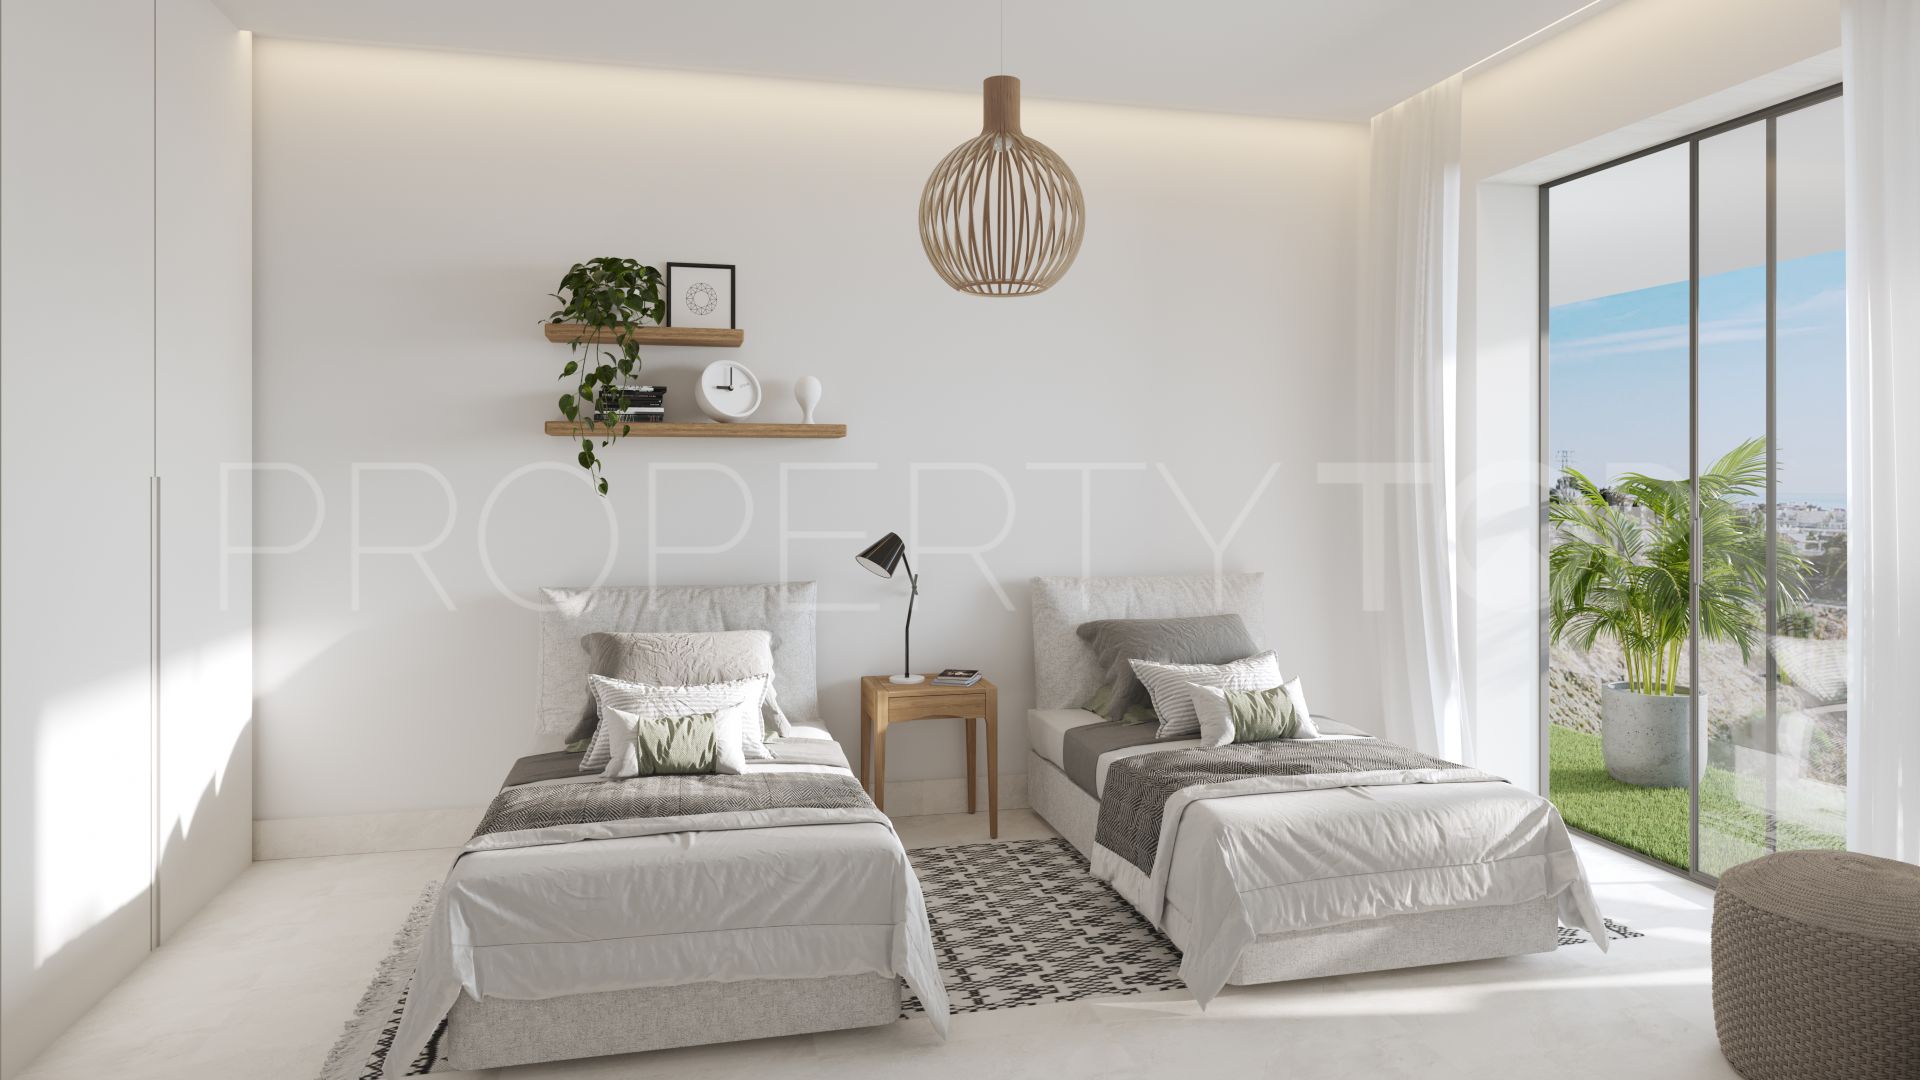 3 bedrooms semi detached villa in Reserva del Higuerón for sale